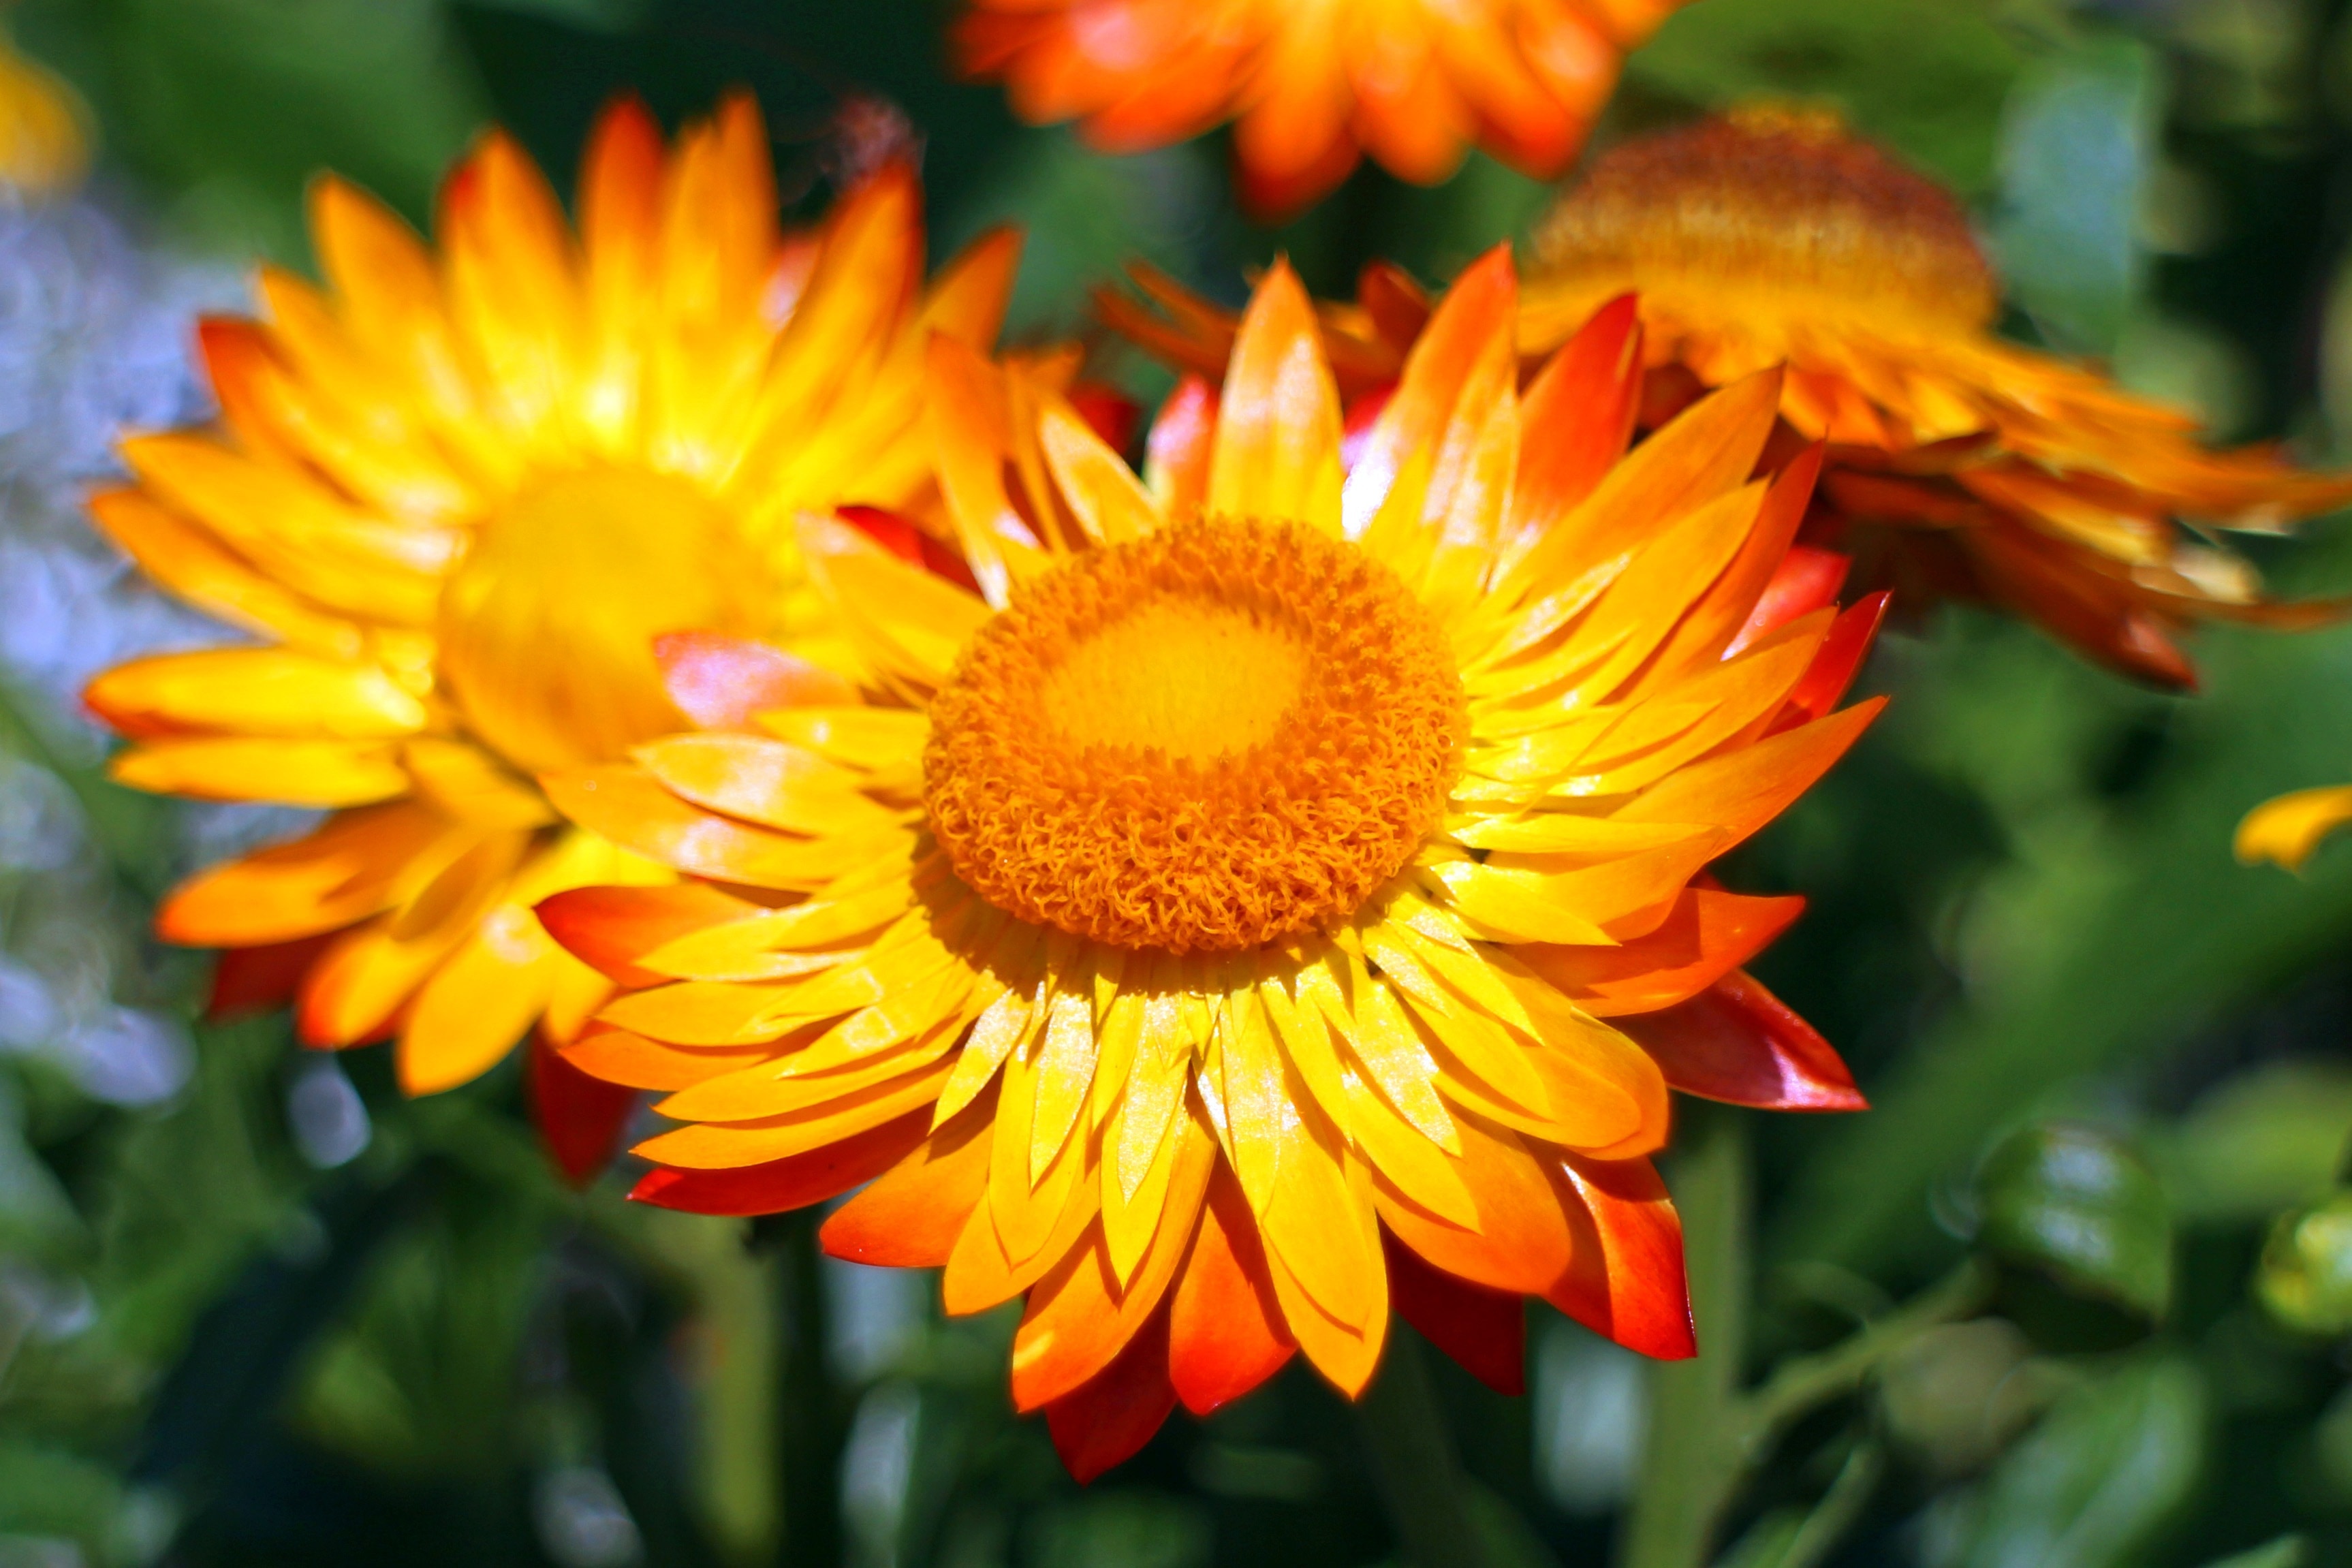 yellow and orange flower during daytime